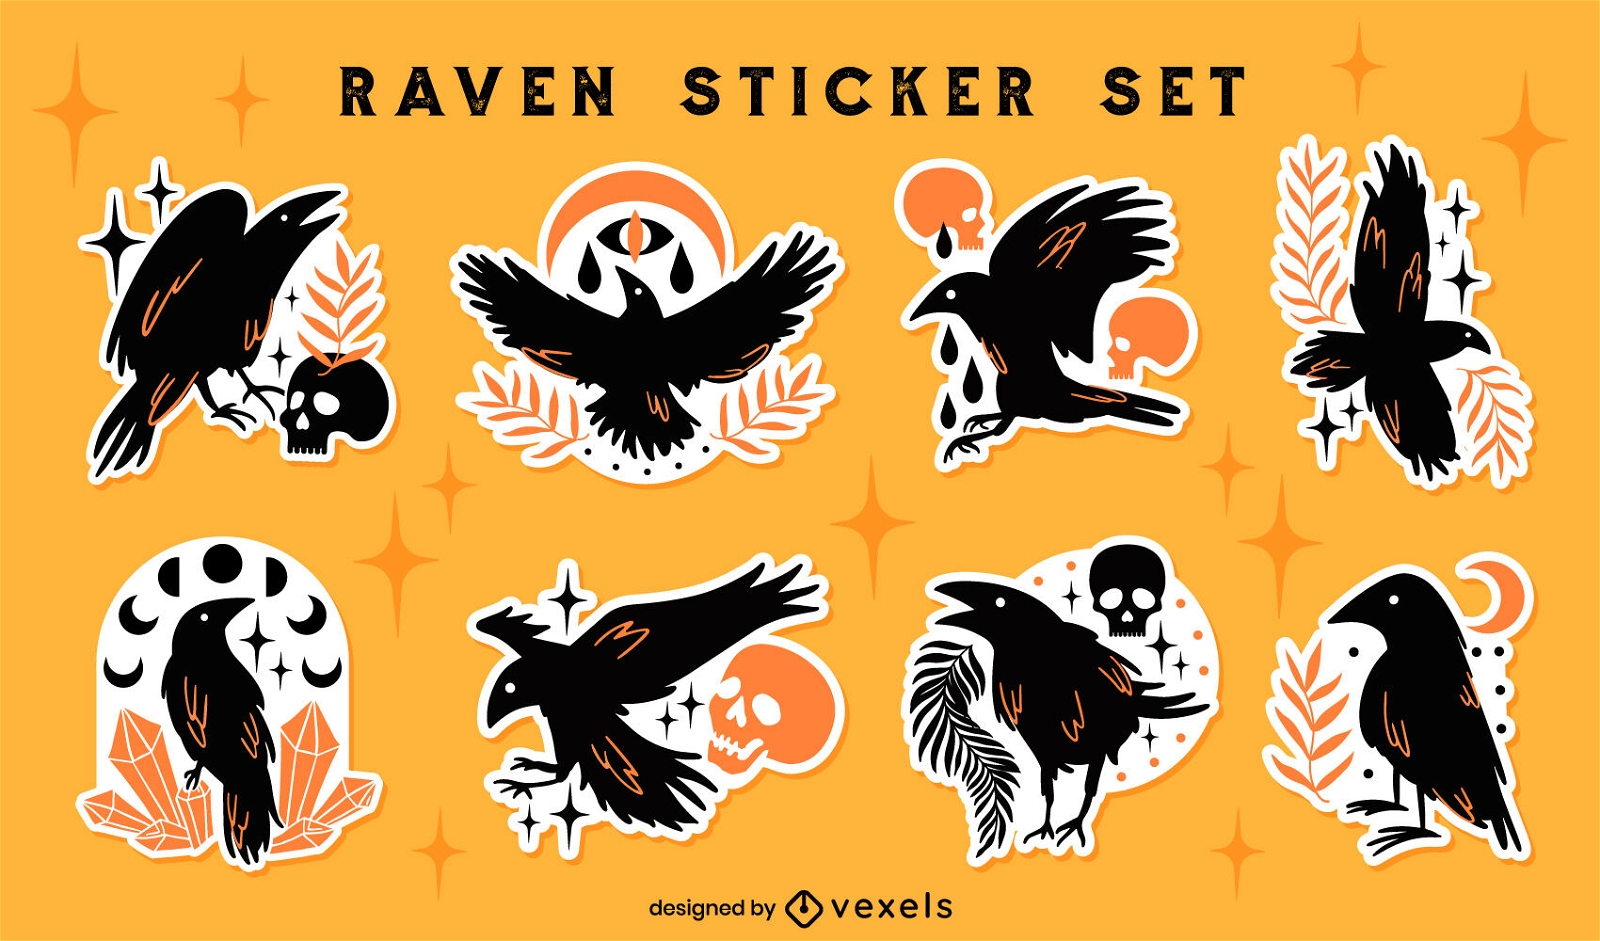 Gothic raven sticker set